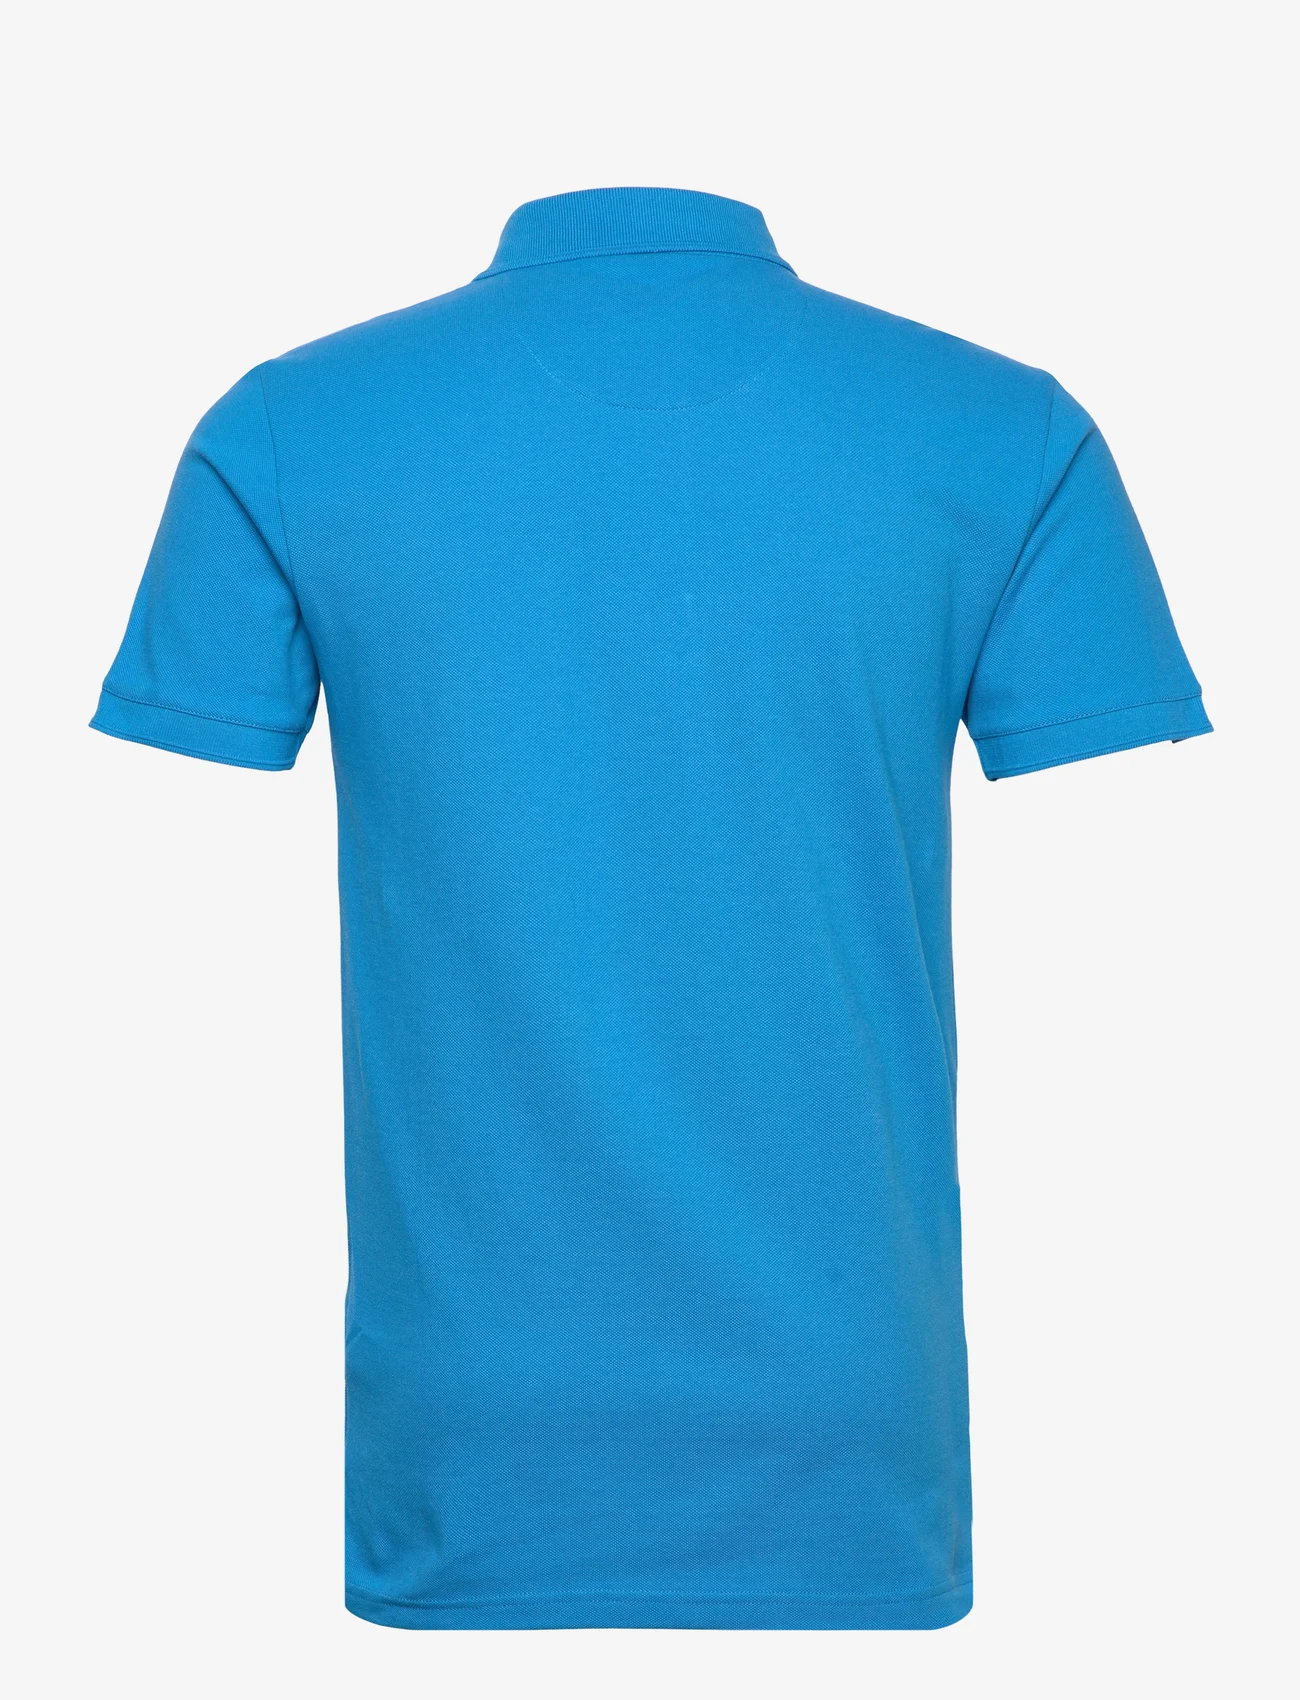 Armor Lux - Polo-Shirt - kortærmede poloer - royal blue - 1